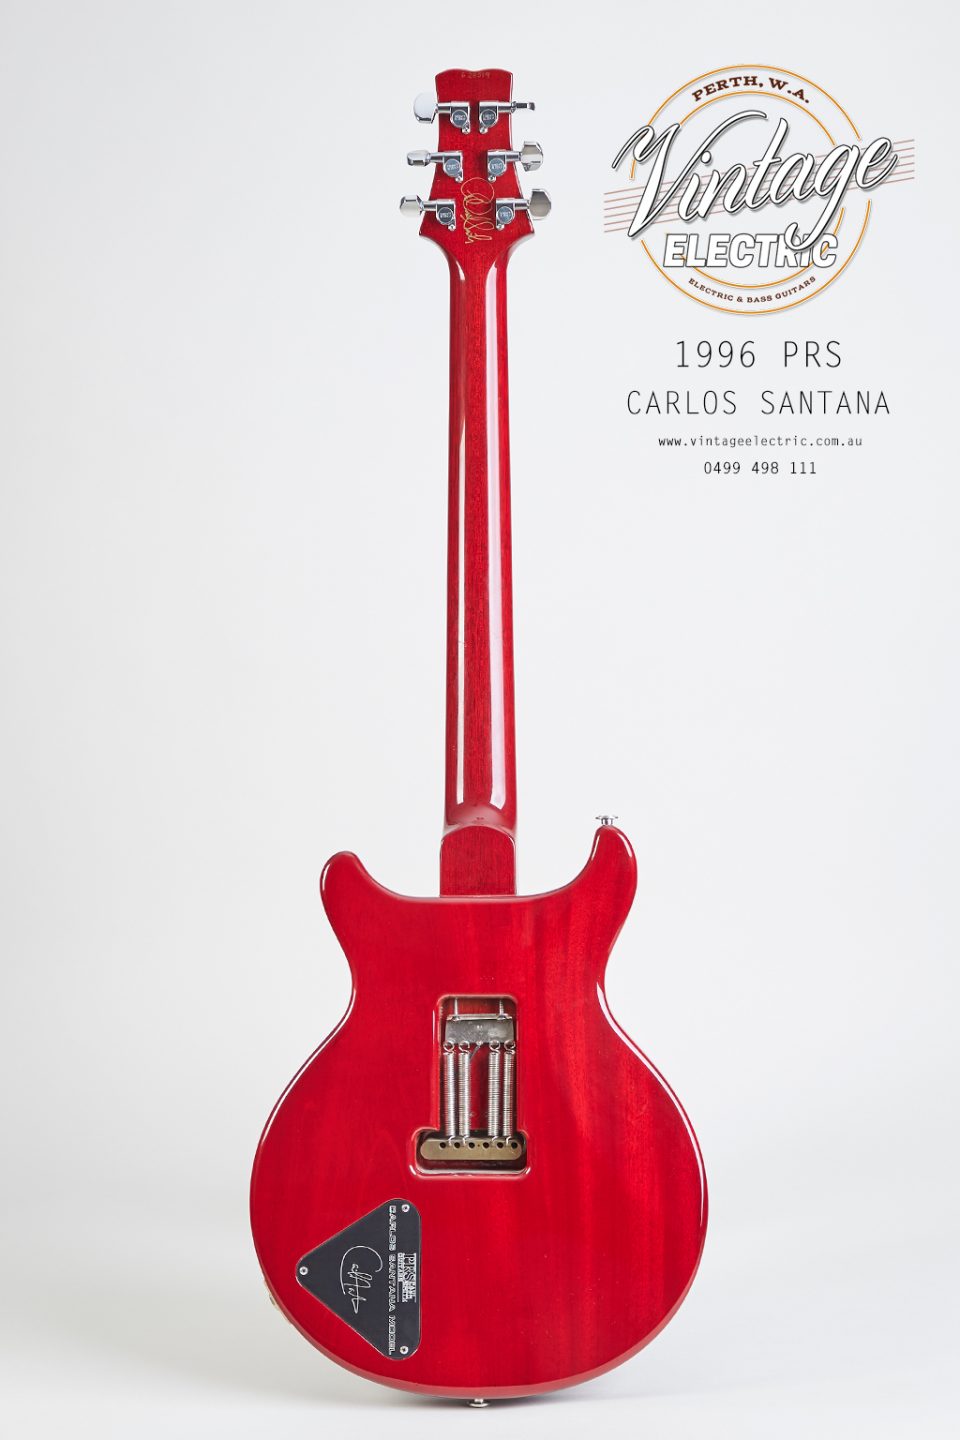 1996 PRS Santana Back of Guitar